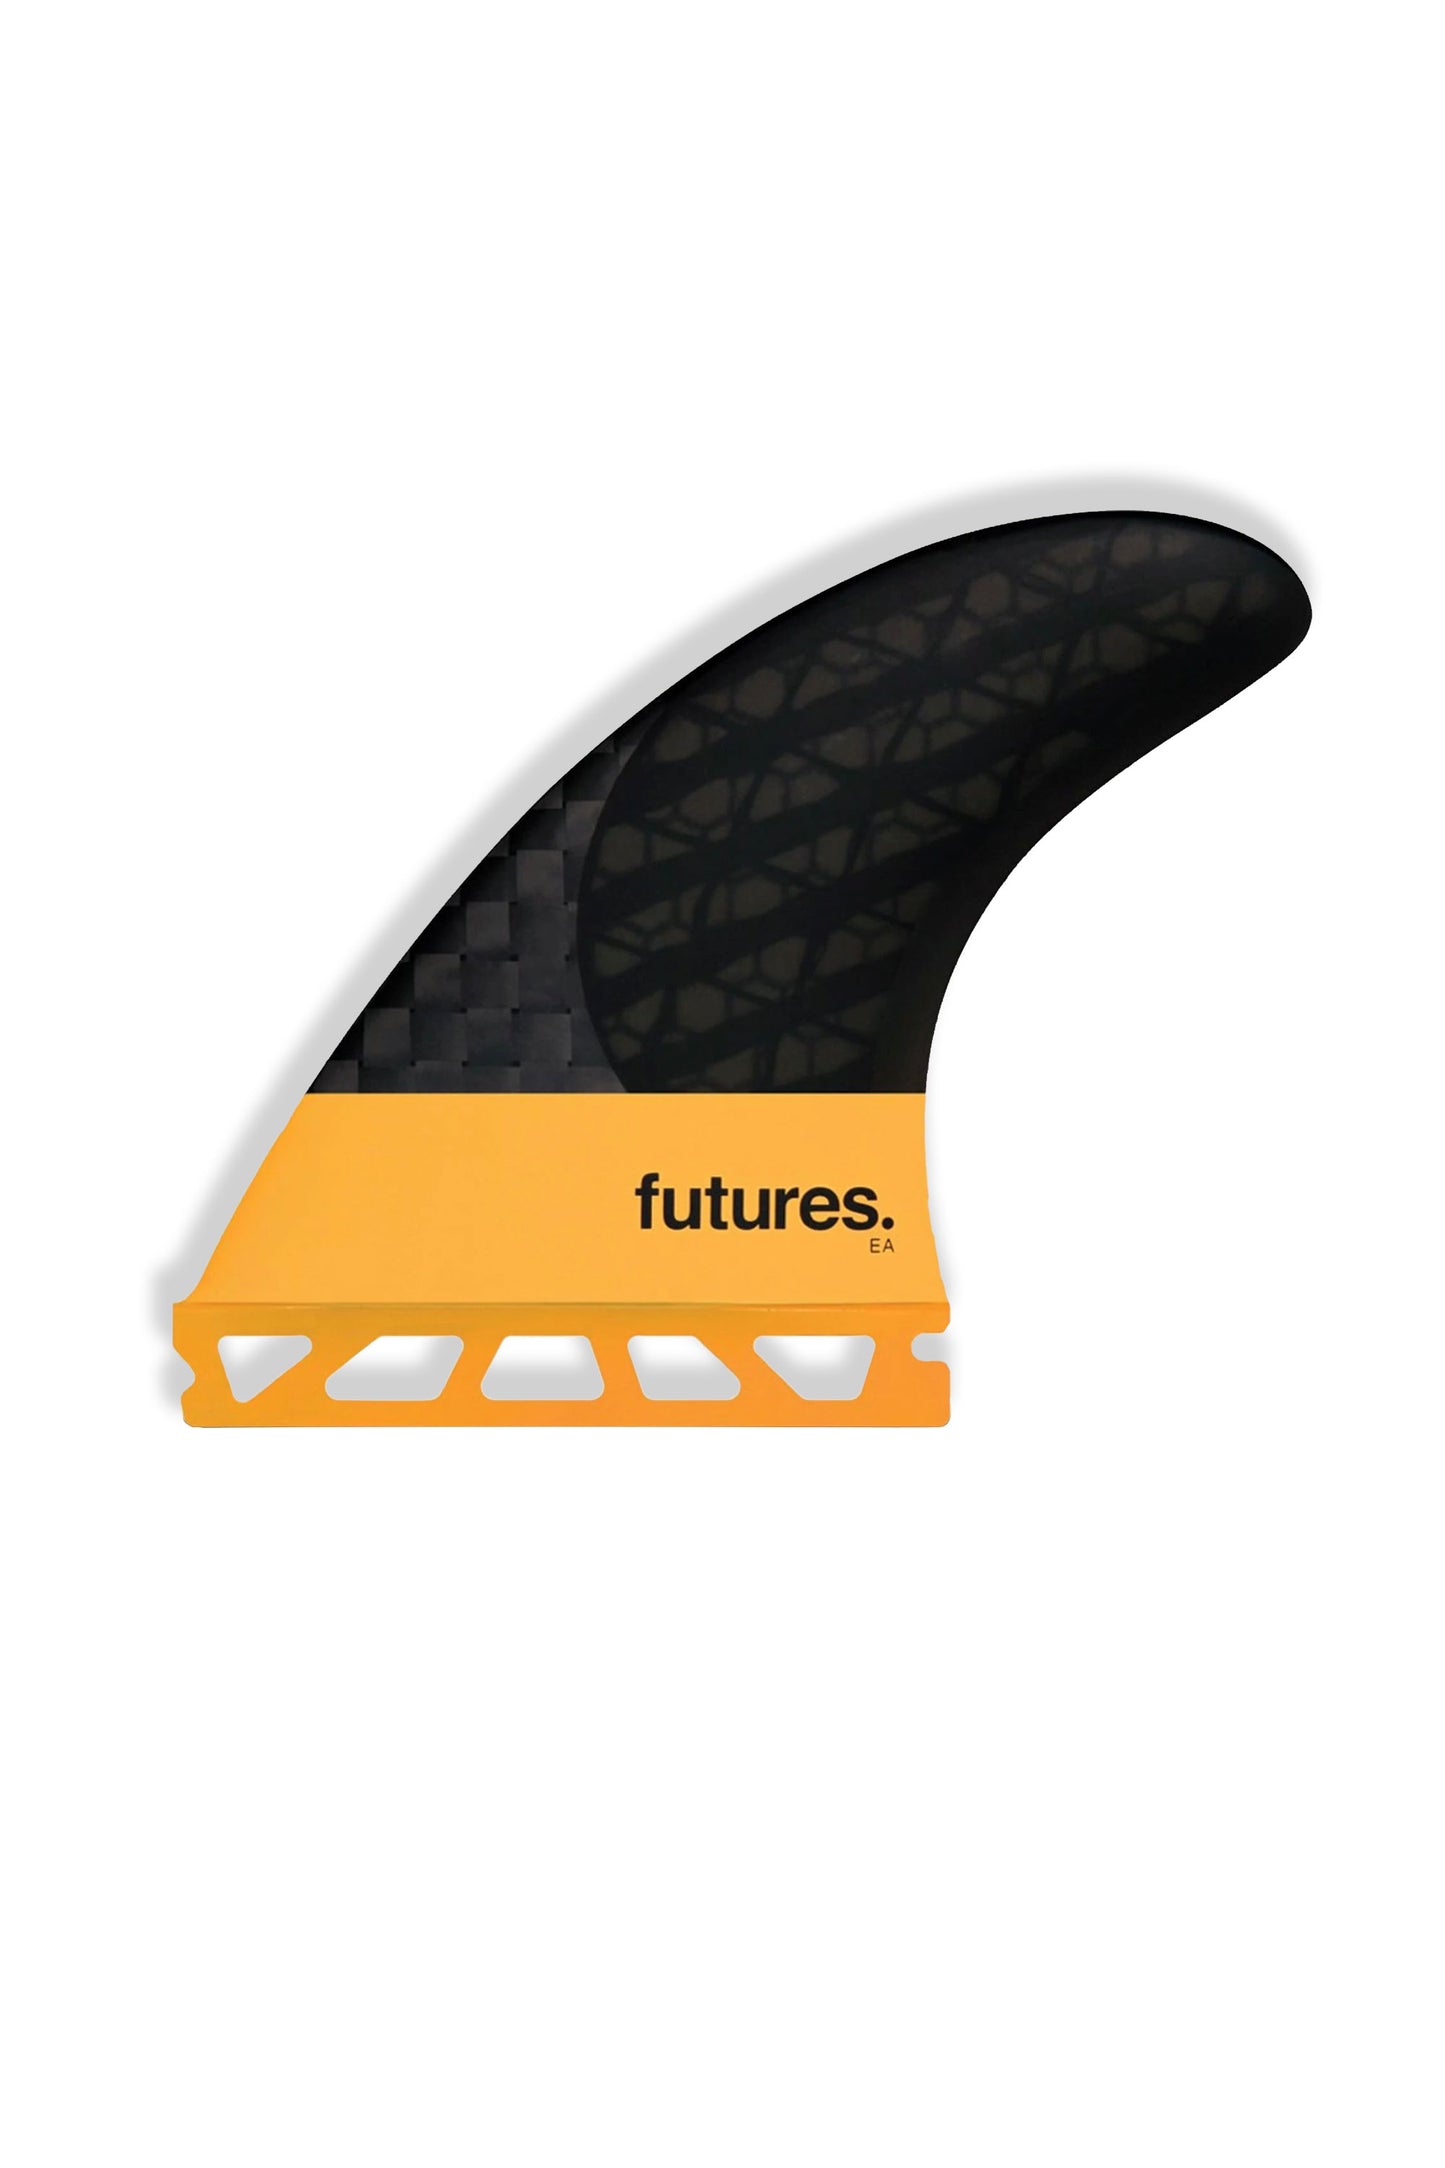 
                  
                       pukas-surf-shop-futures-VII-futures-eric-arakawa-blackstix-3.0
                  
                